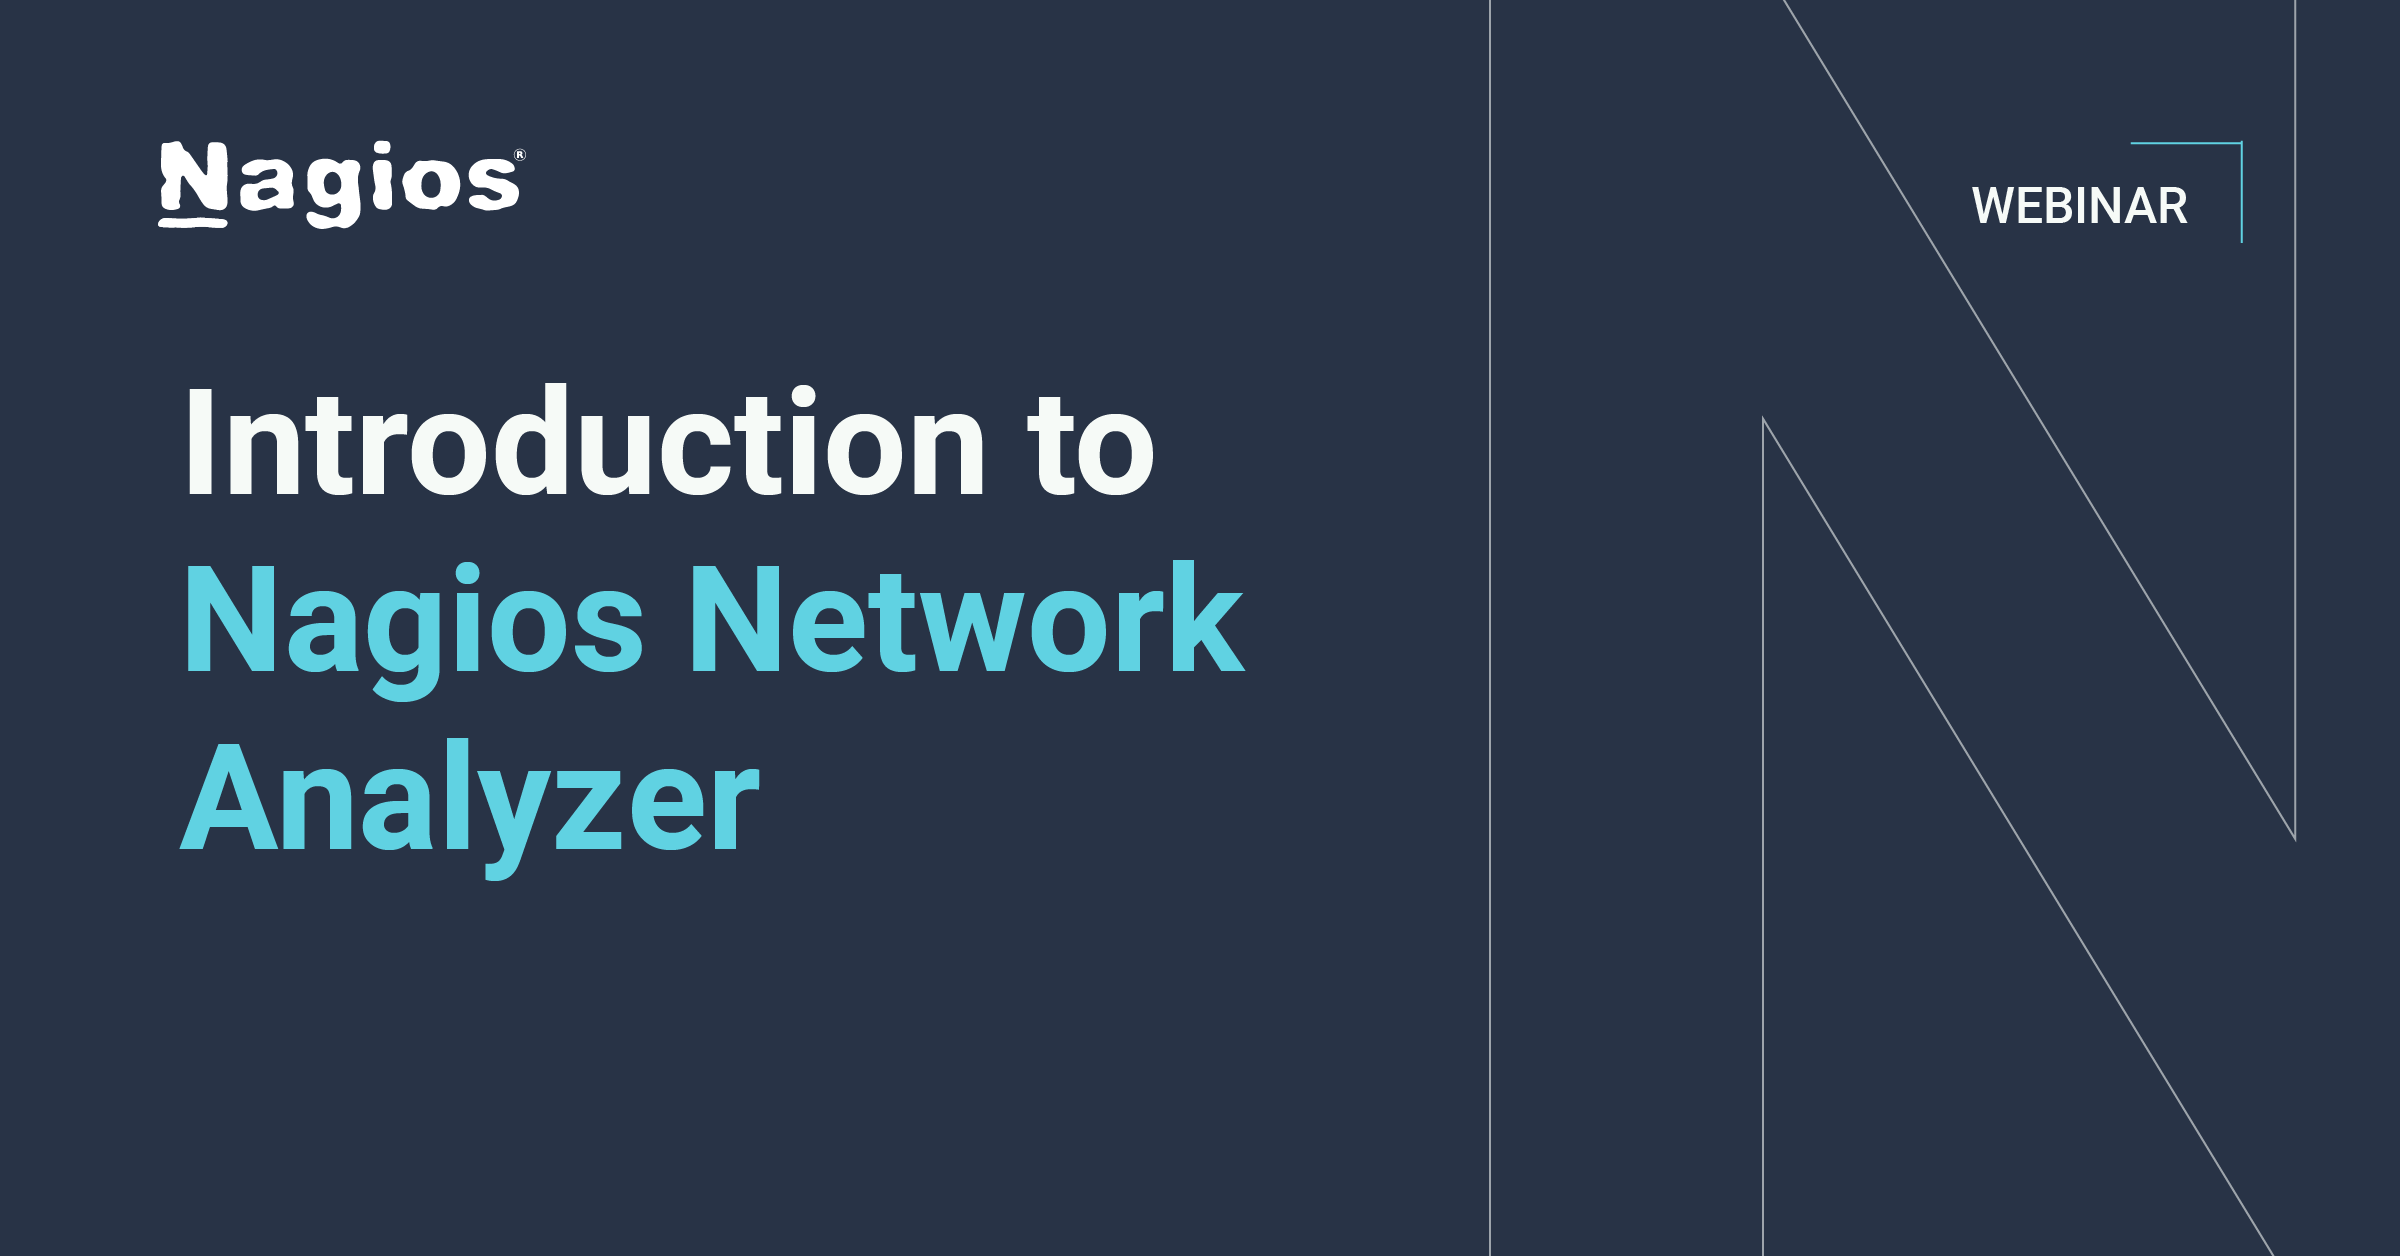 nagios webinars: introduction to nagios network analyzer